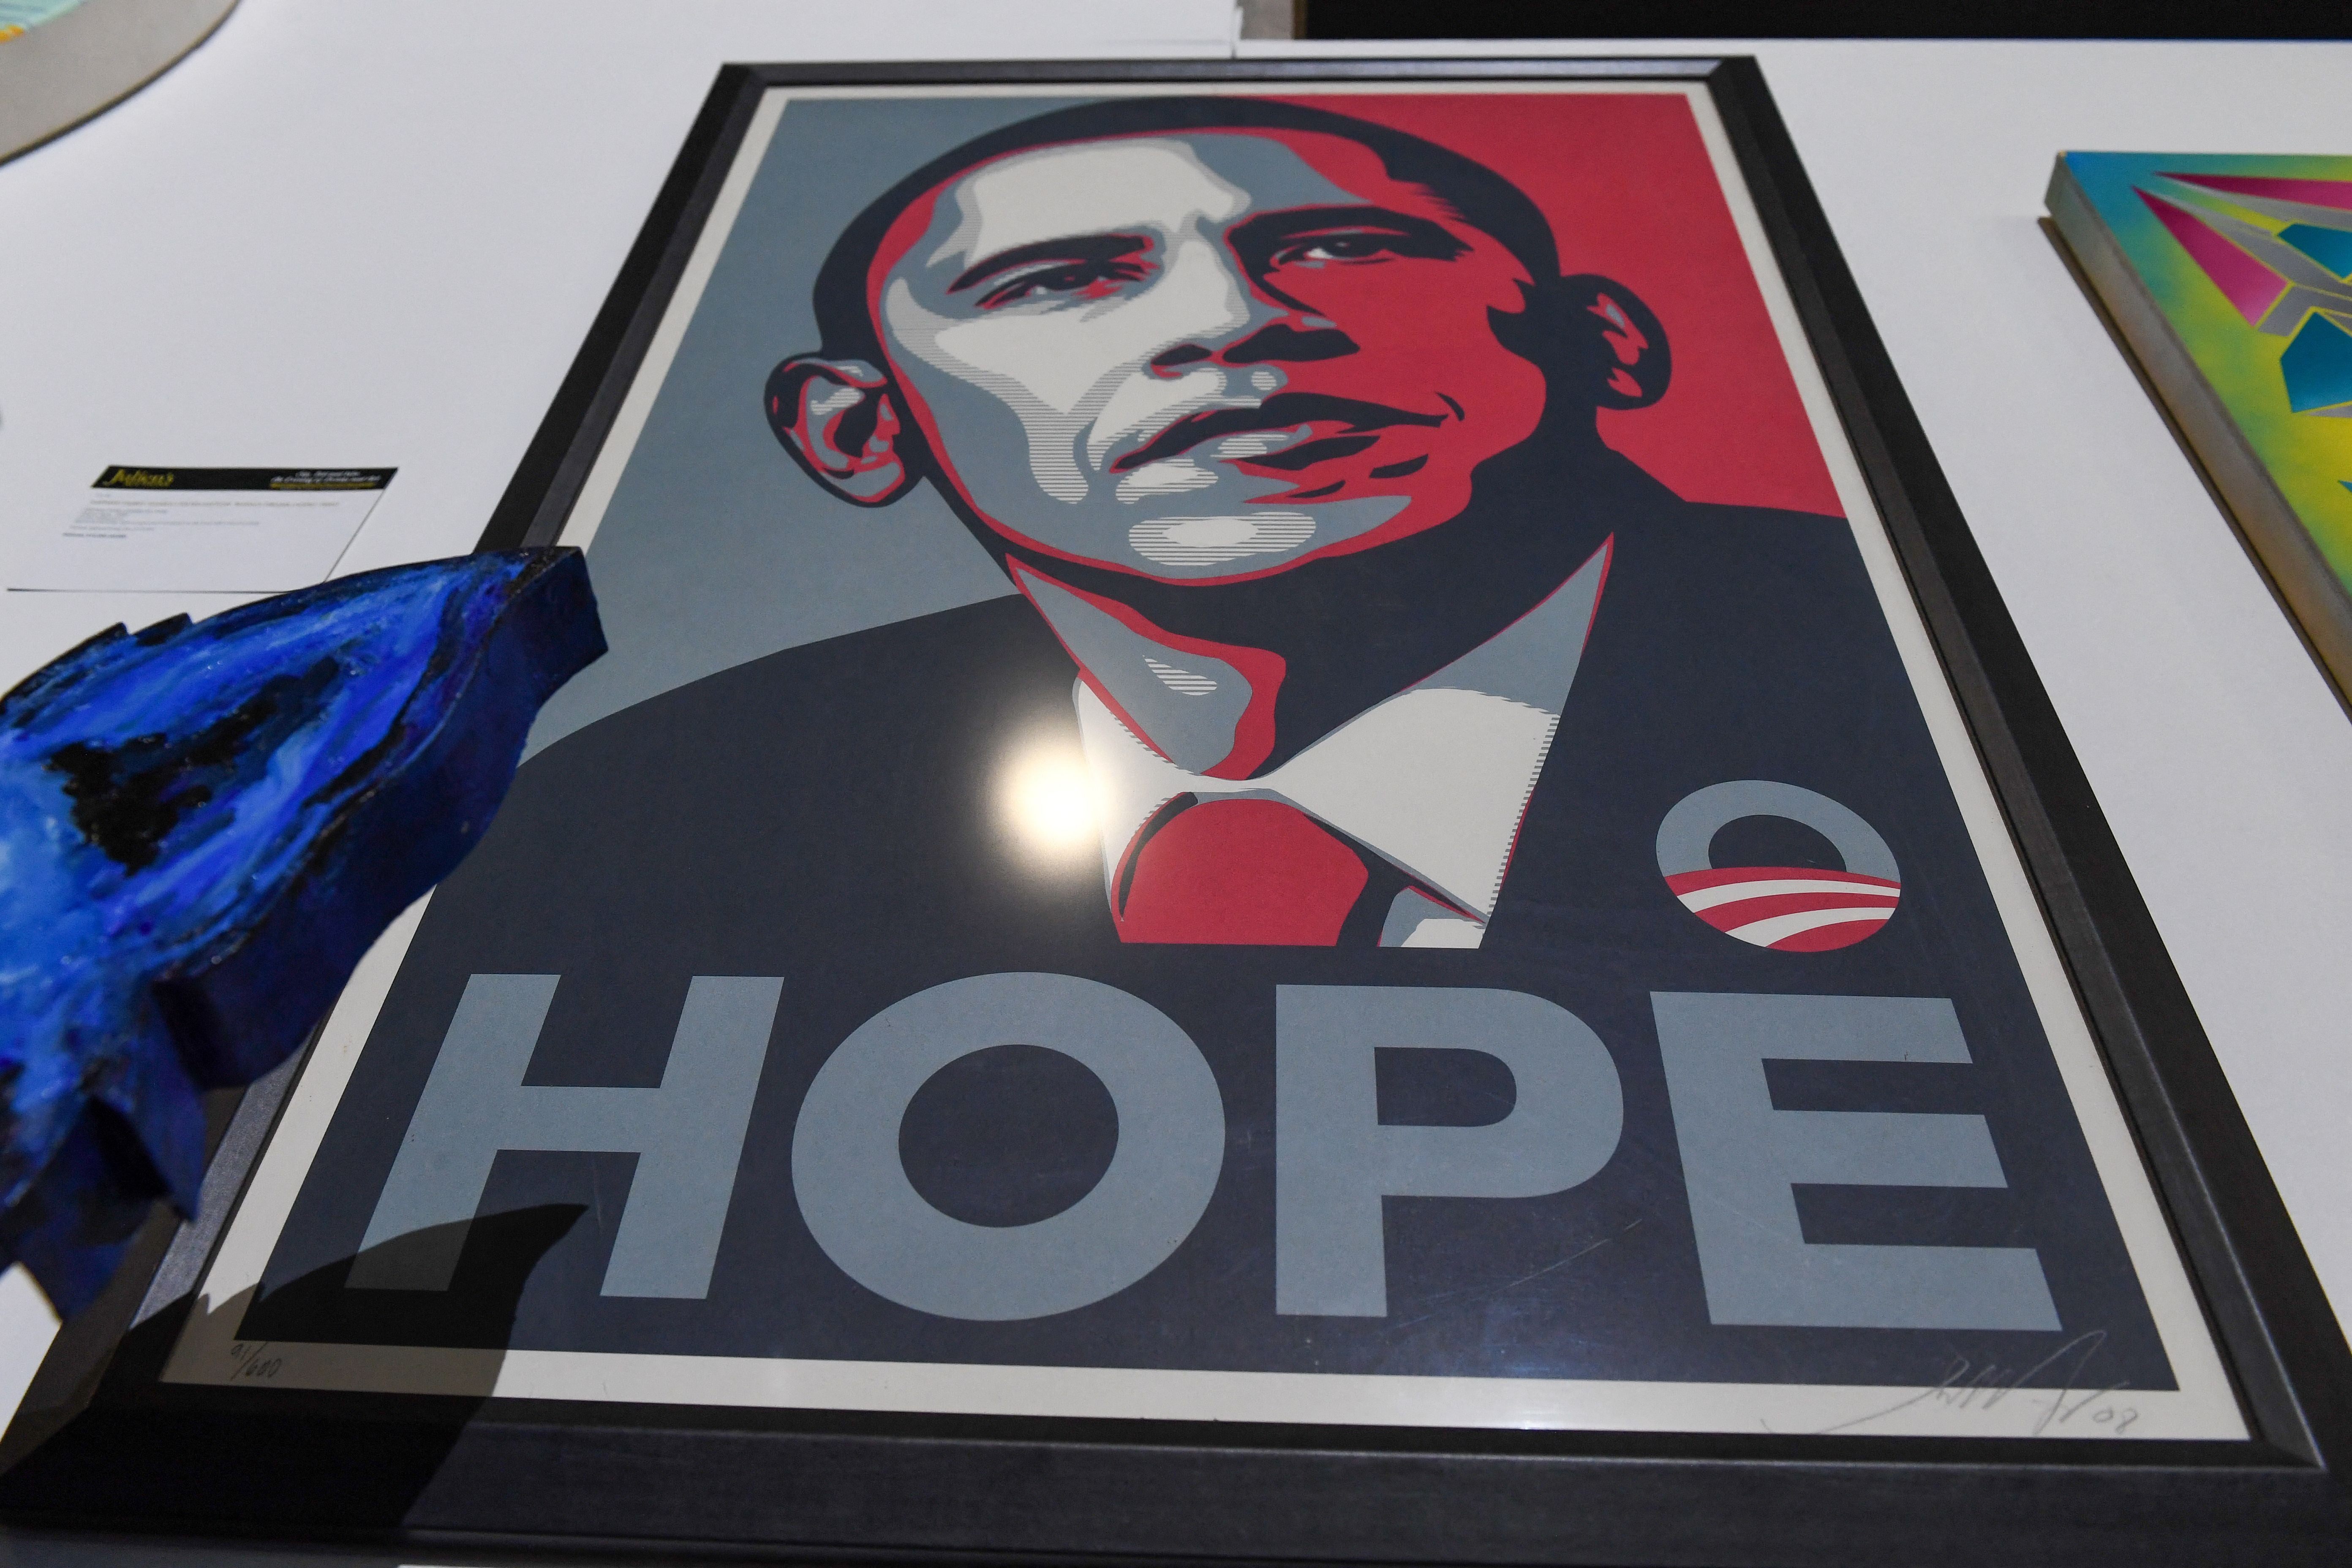 Shepard Fairey’s ‘Hope’ showing Barack Obama